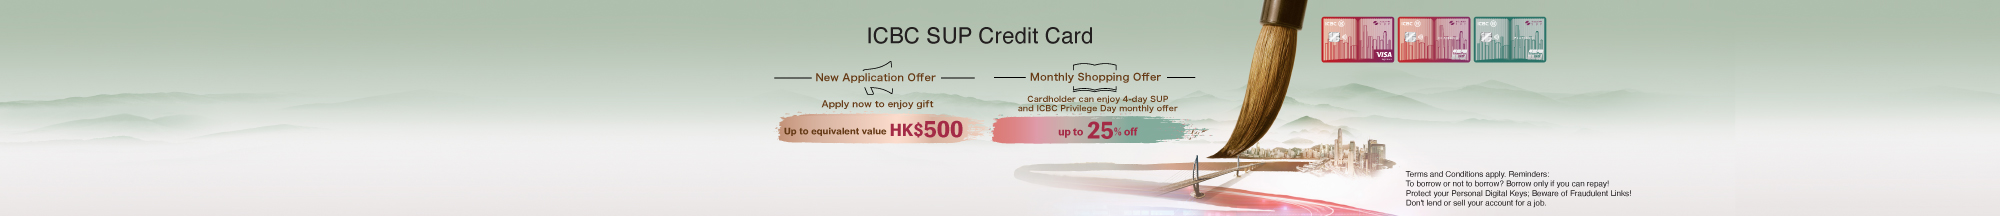 ICBC SUP Credit Card 